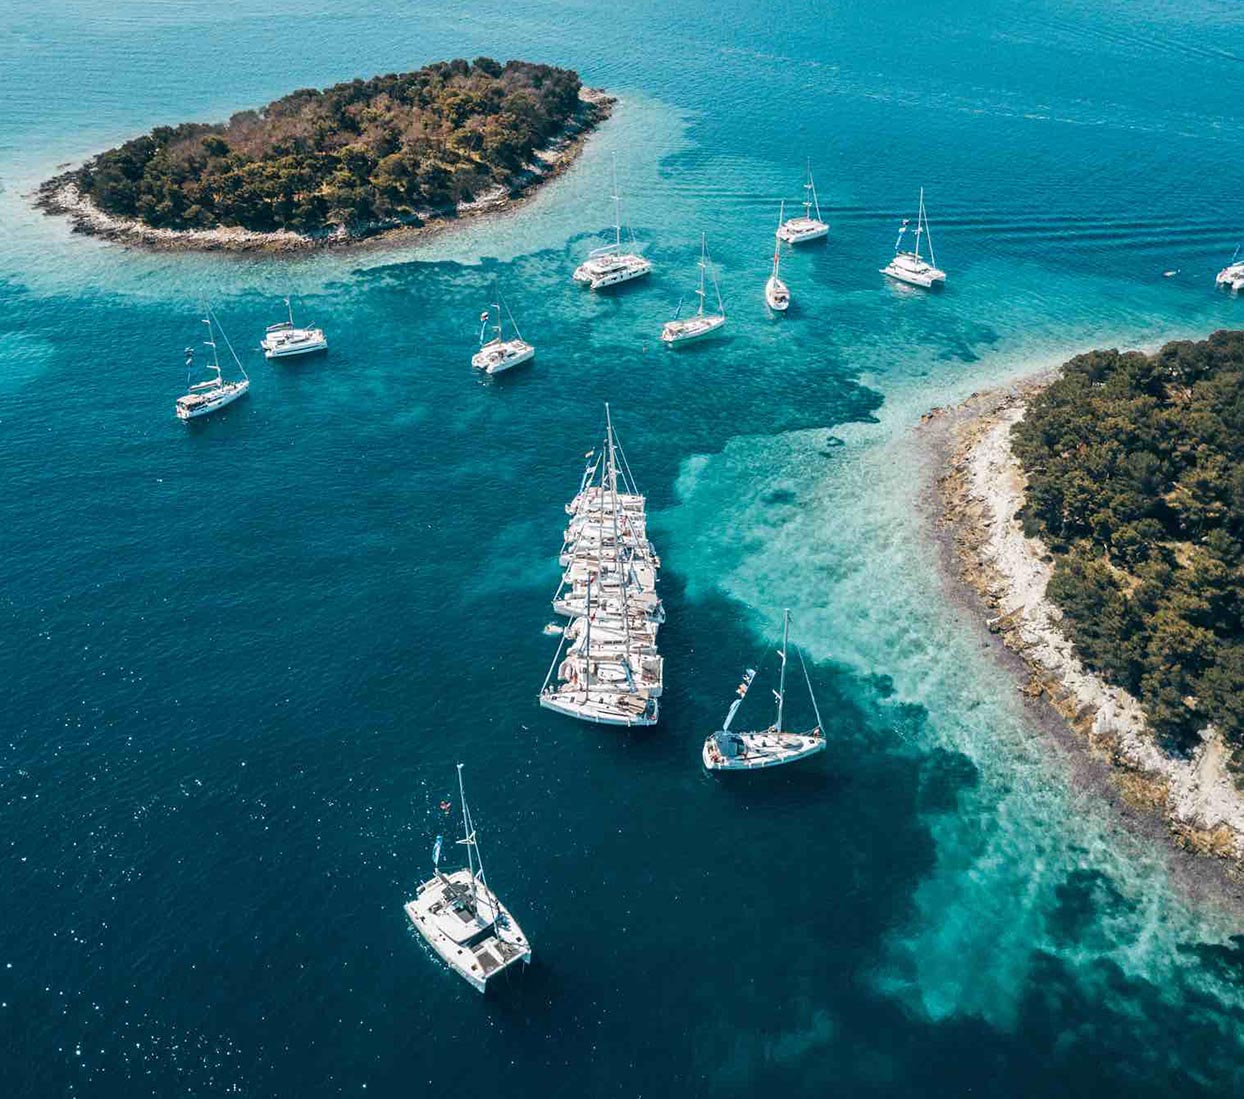 yacht week croatia reviews